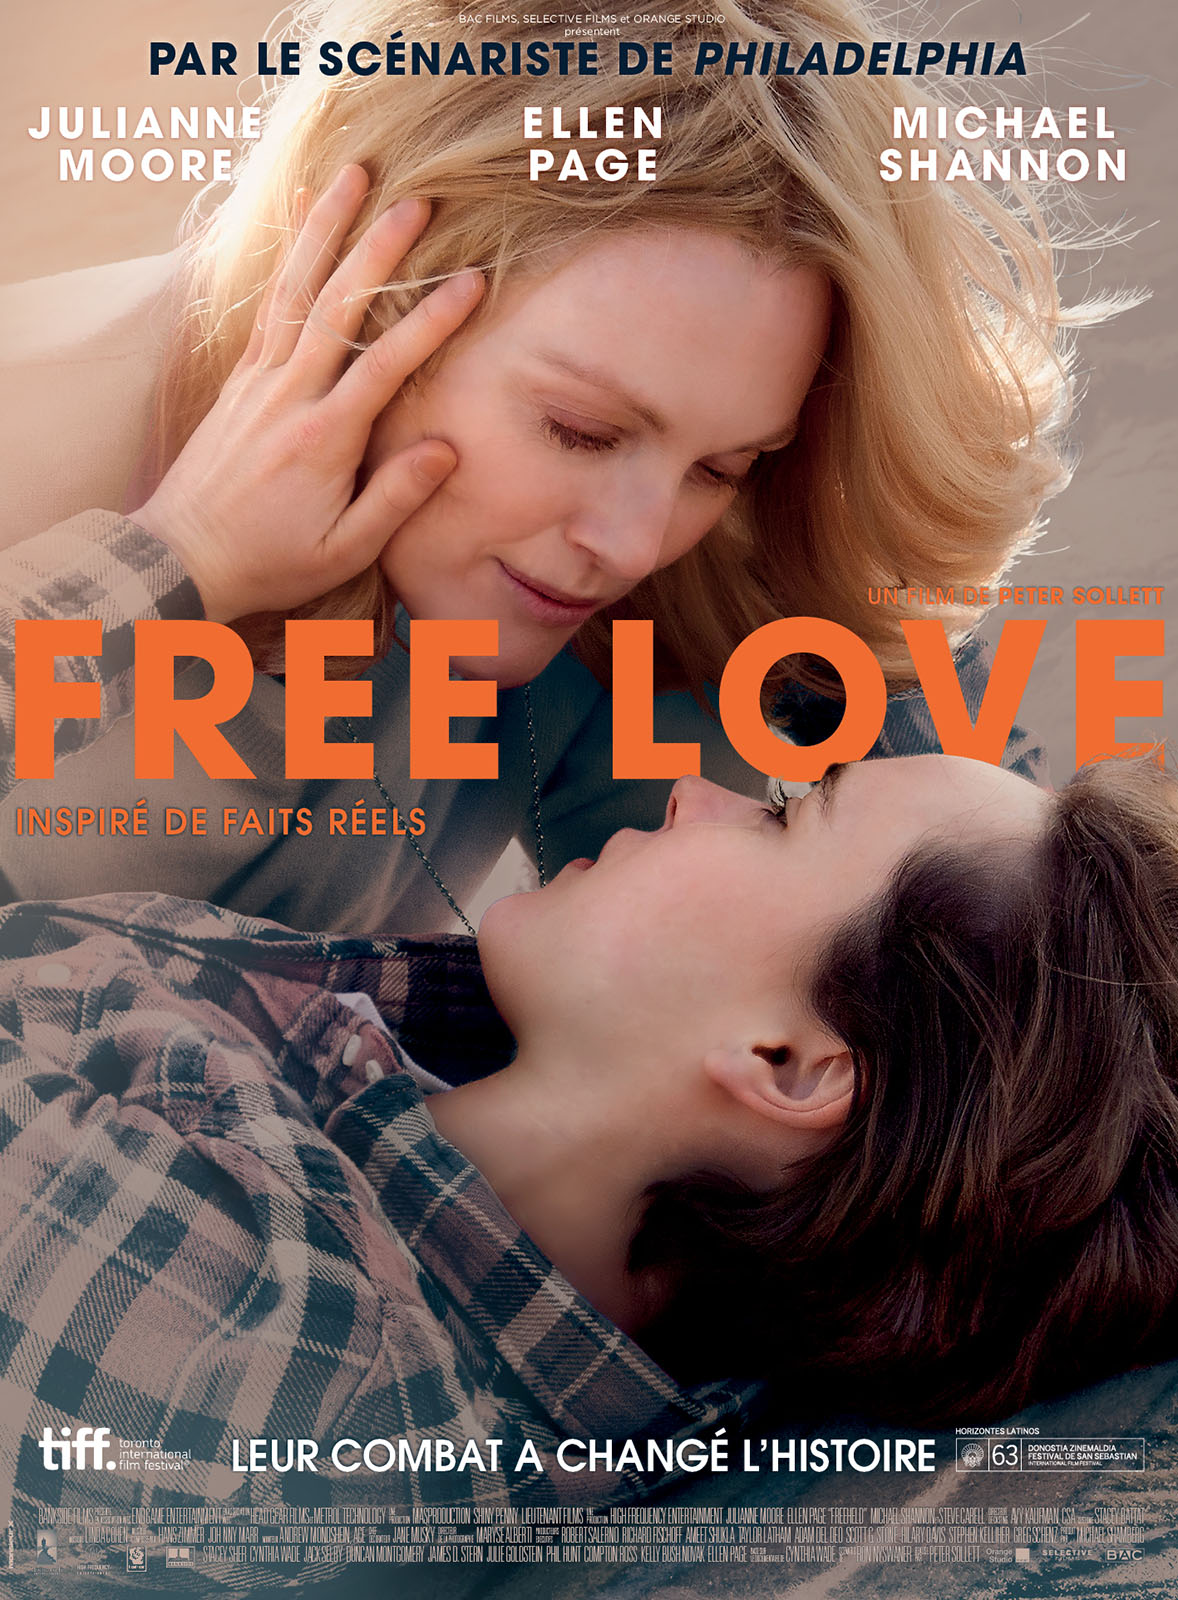 Free love - Freeheld